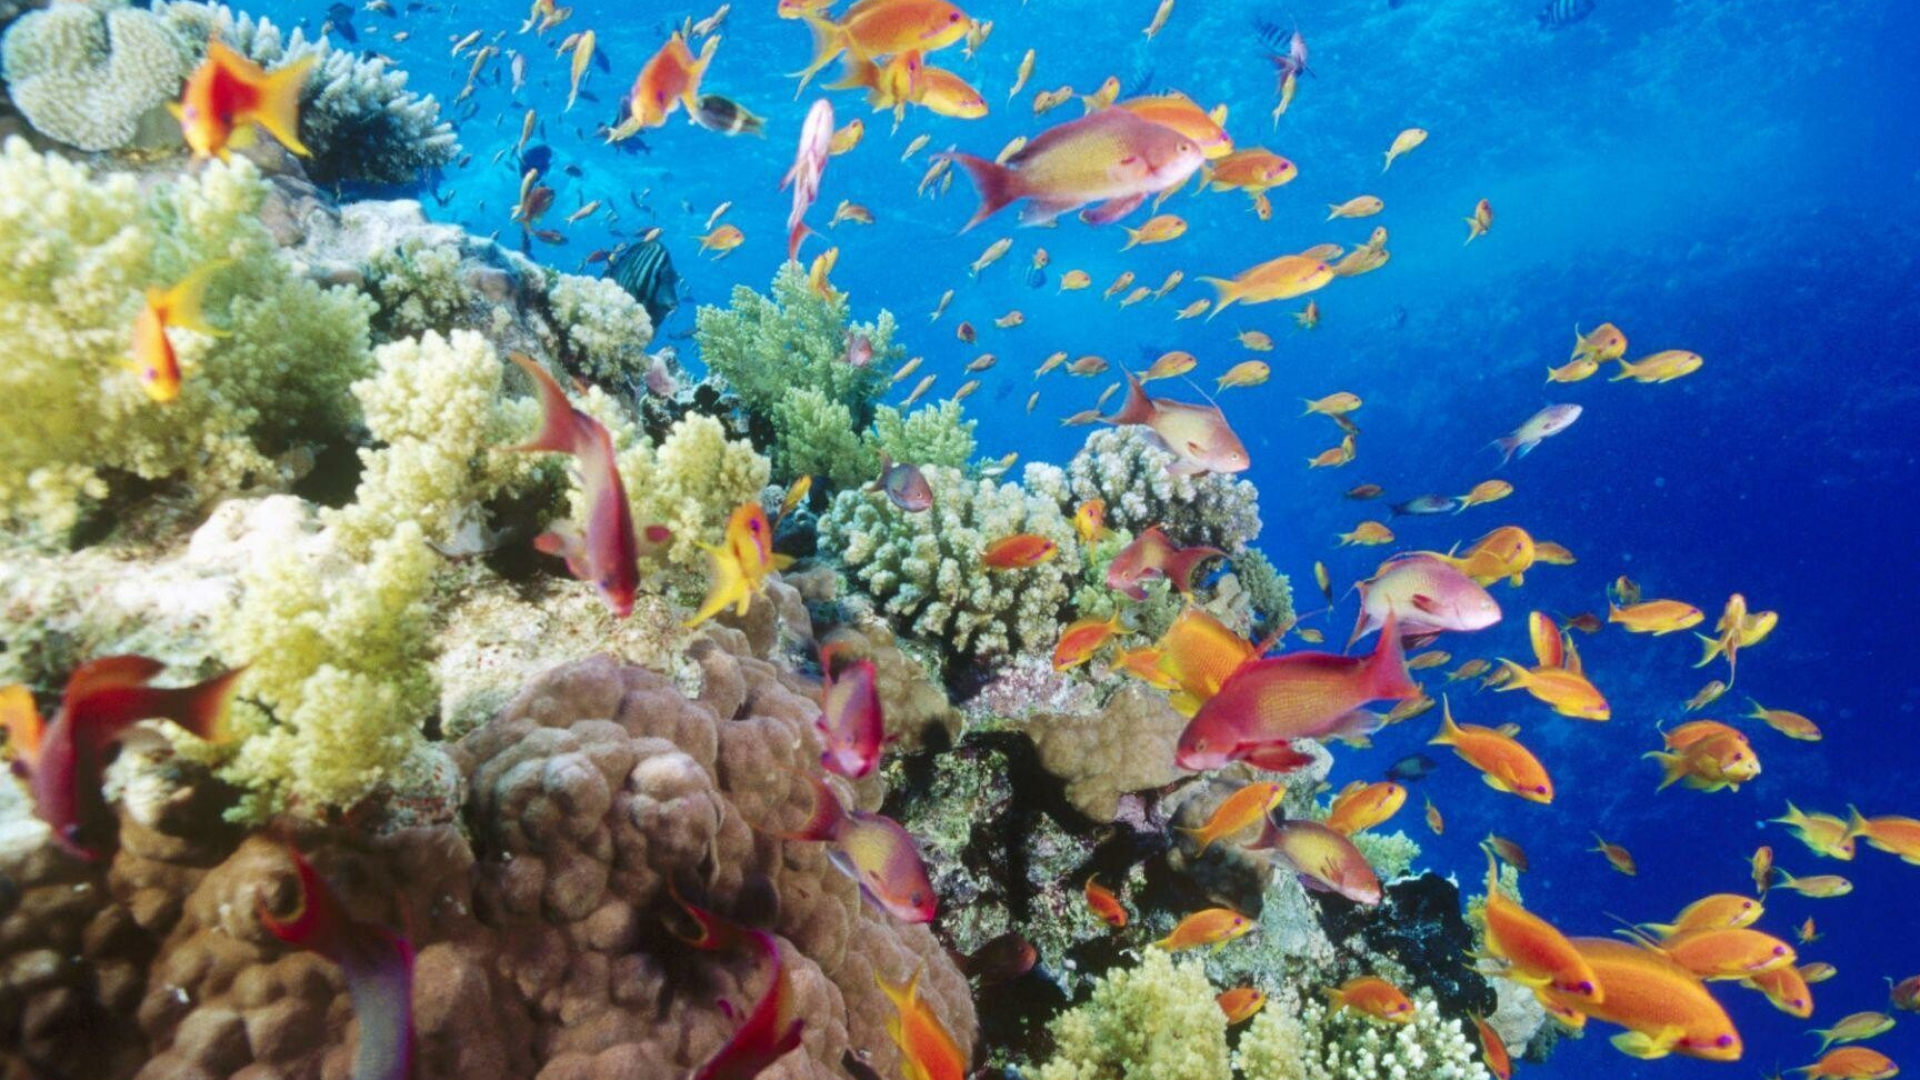 Great Barrier Reef: GBR Marine Park, Underwater ecosystem, Oceanic waters. 1920x1080 Full HD Wallpaper.